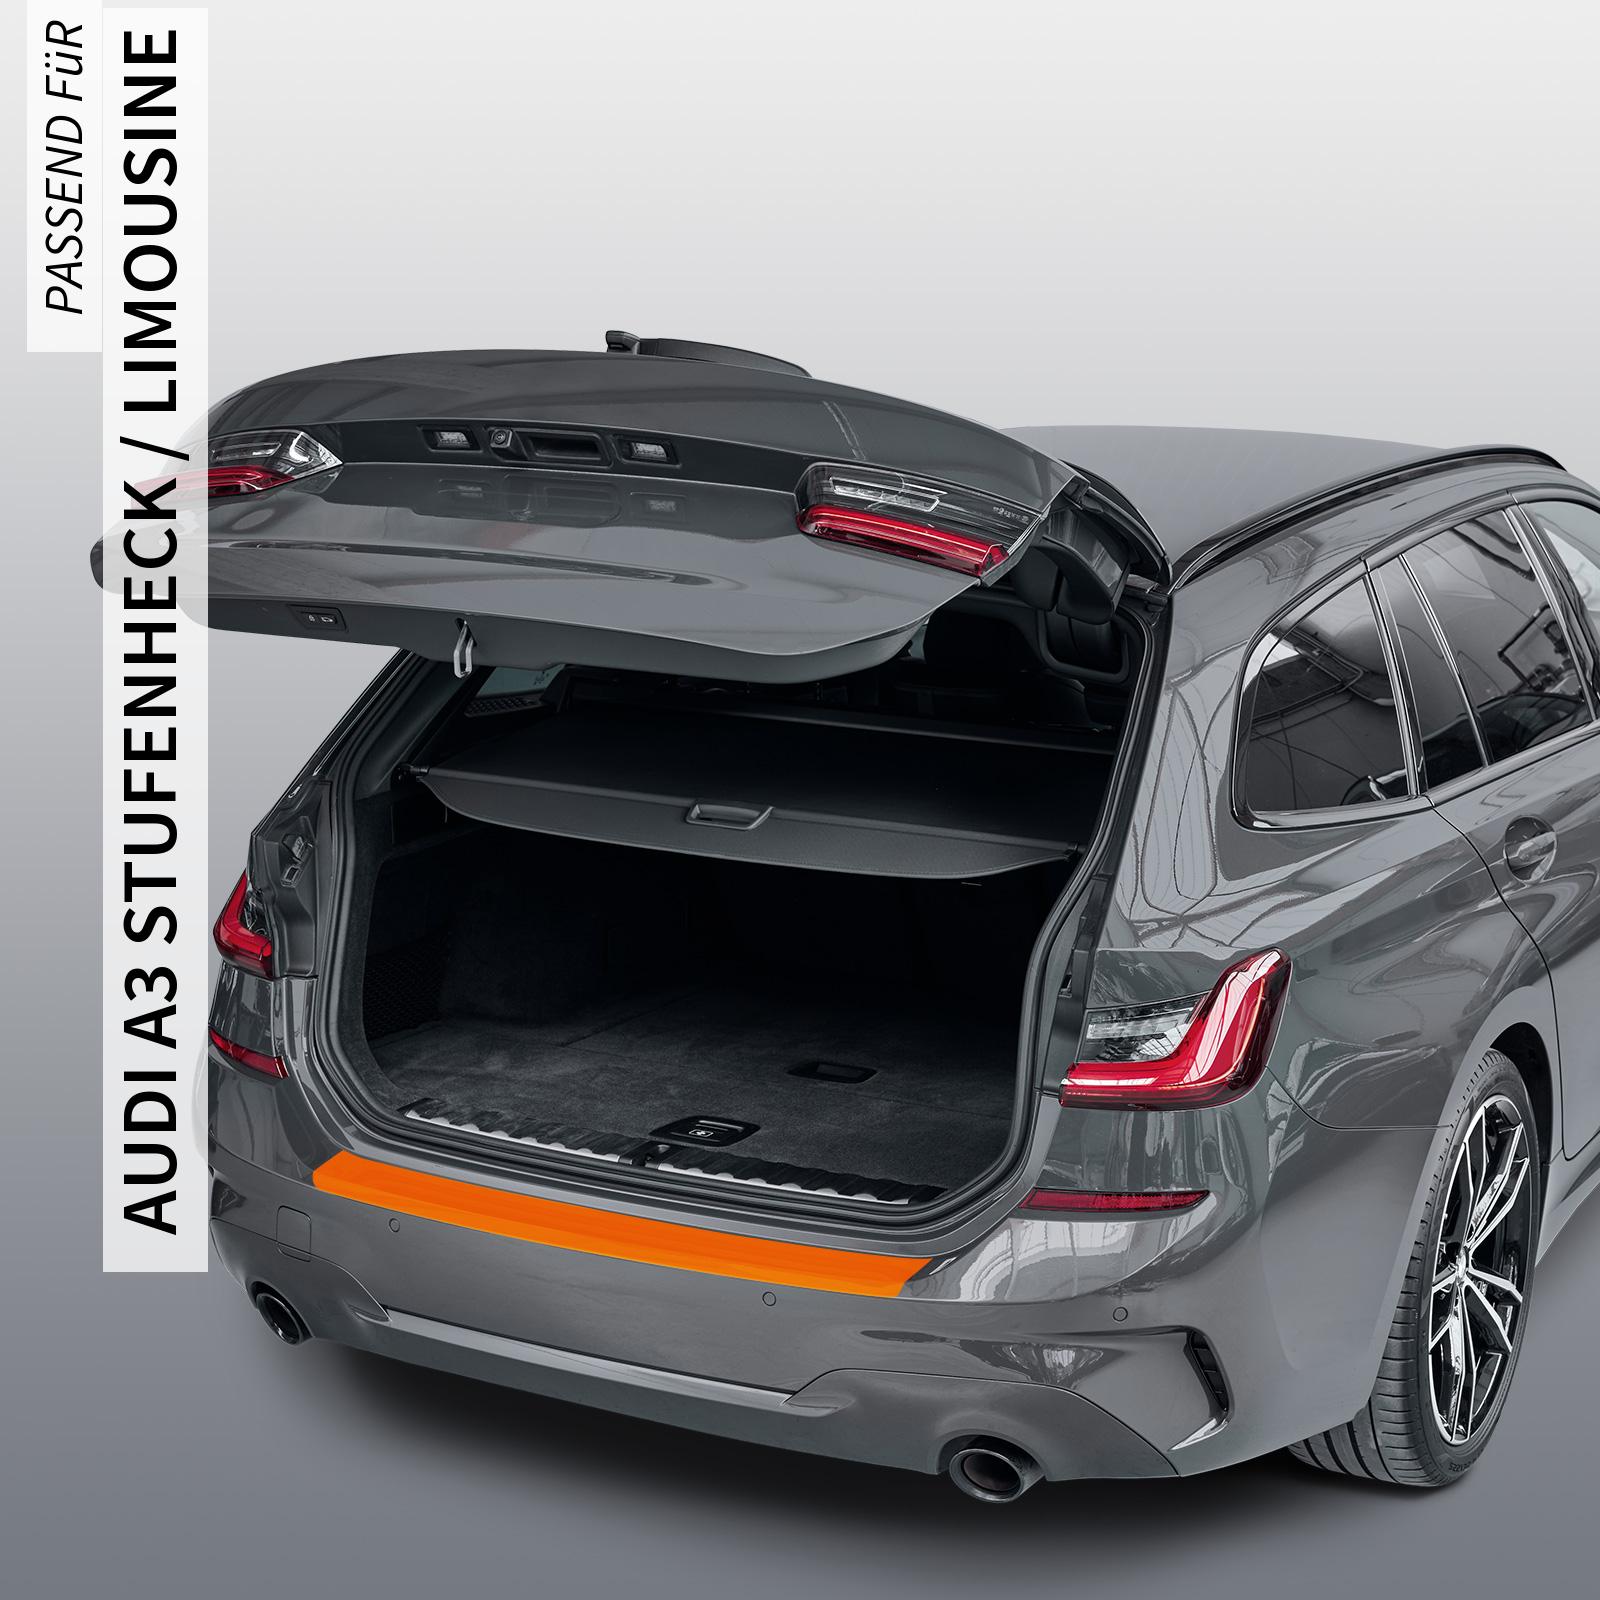 Ladekantenschutzfolie - Transparent Glatt MATT 110 µm stark  für Audi A3 Stufenheck / Limousine Typ 8V, BJ 02/2013-2020